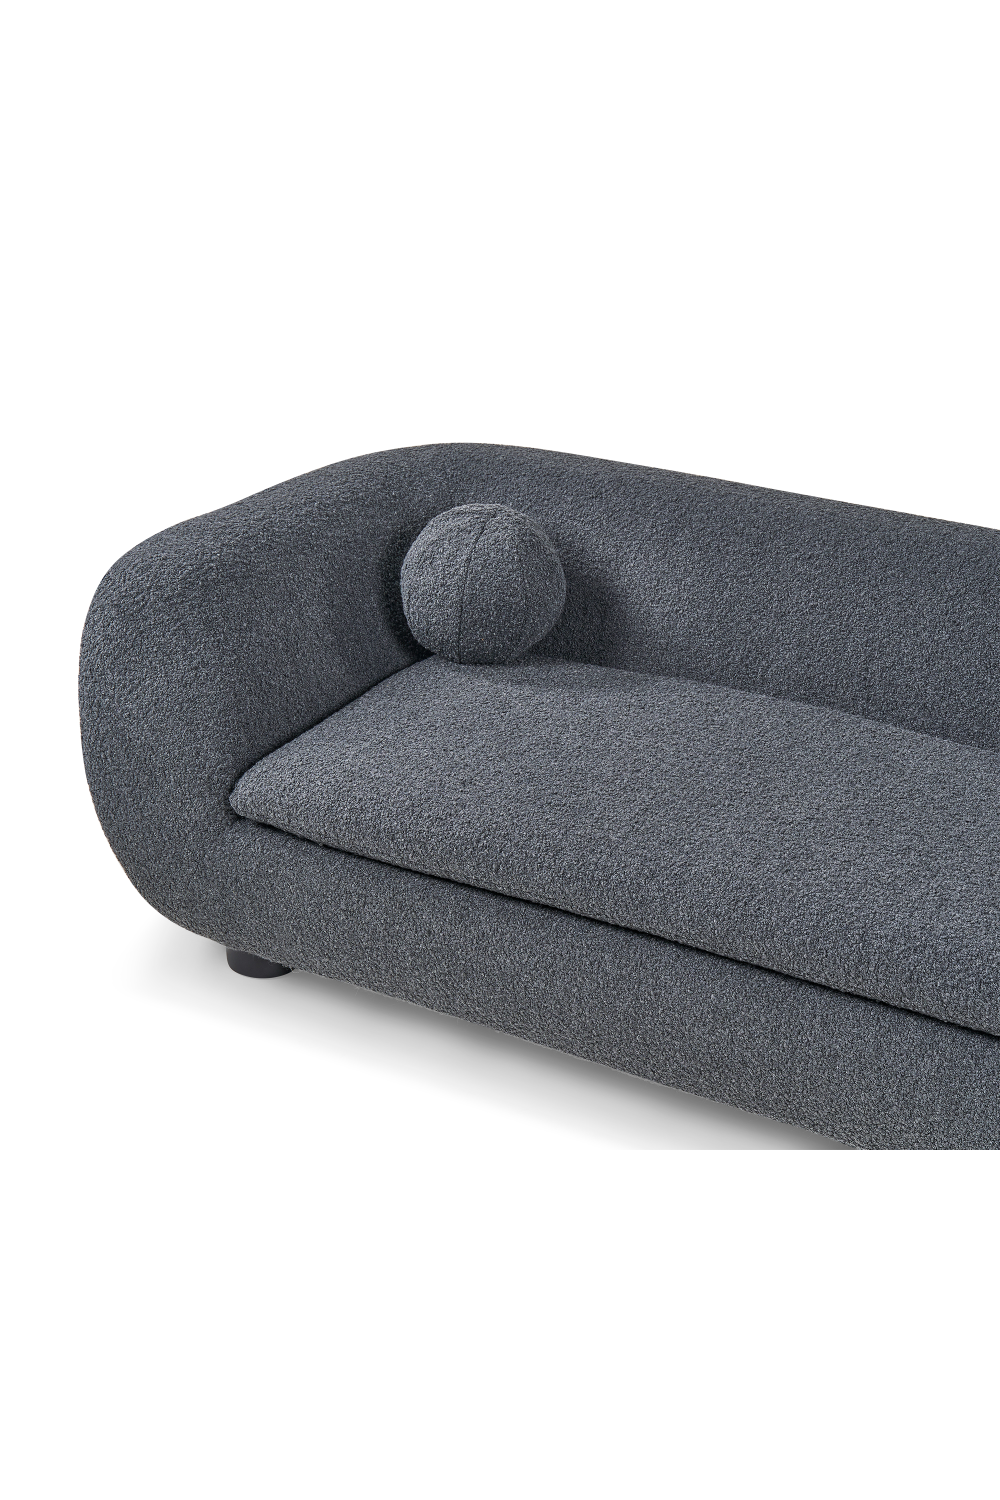 Modern Minimalist Sofa | Liang & Eimil Hudson | Oroa.com